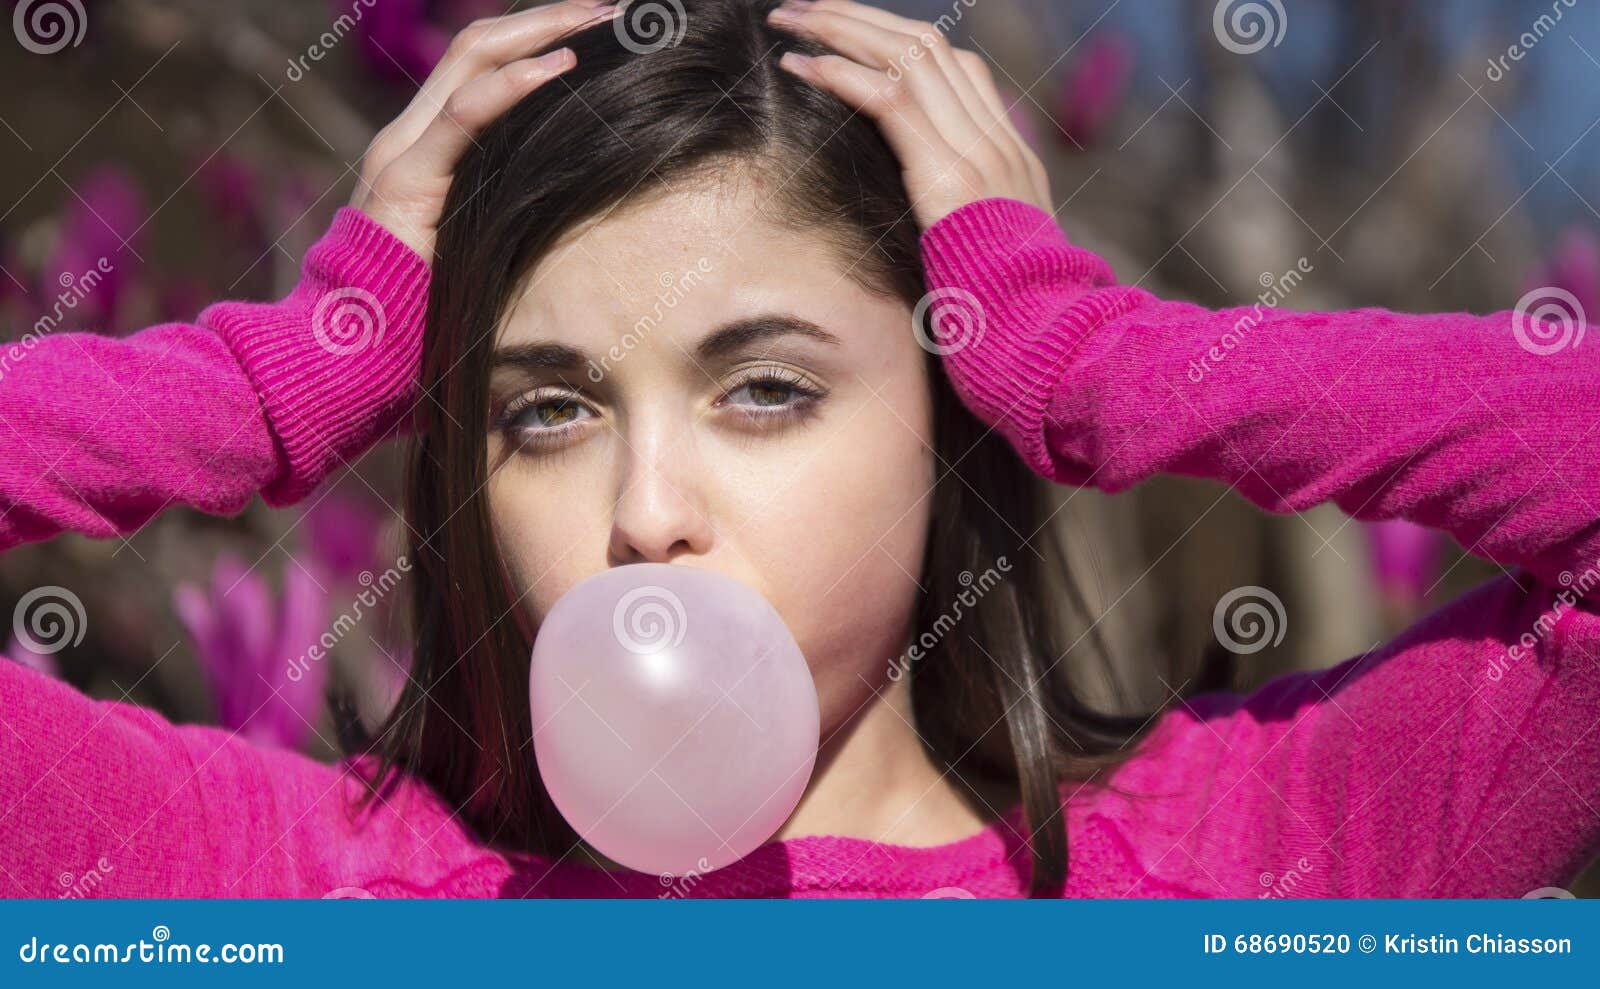 bubble gum blowing teen girls